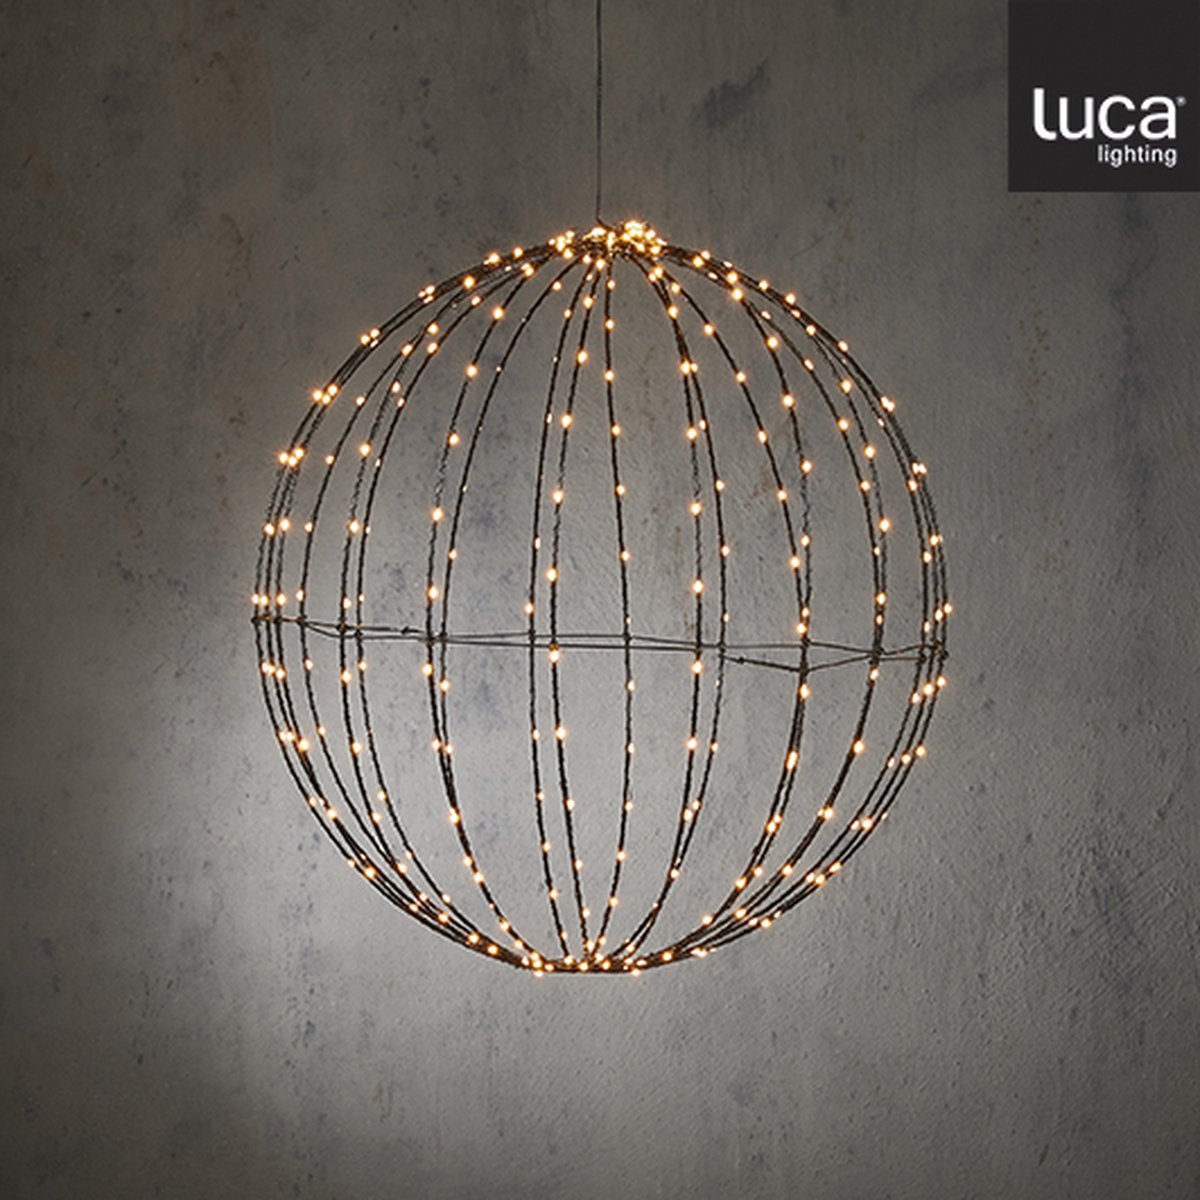 Kust Verlichten Dosering Luca Lighting Kerstverlichting Bal met Warm Witte LED Lampjes - Ø50 cm -  Zwart | bol.com